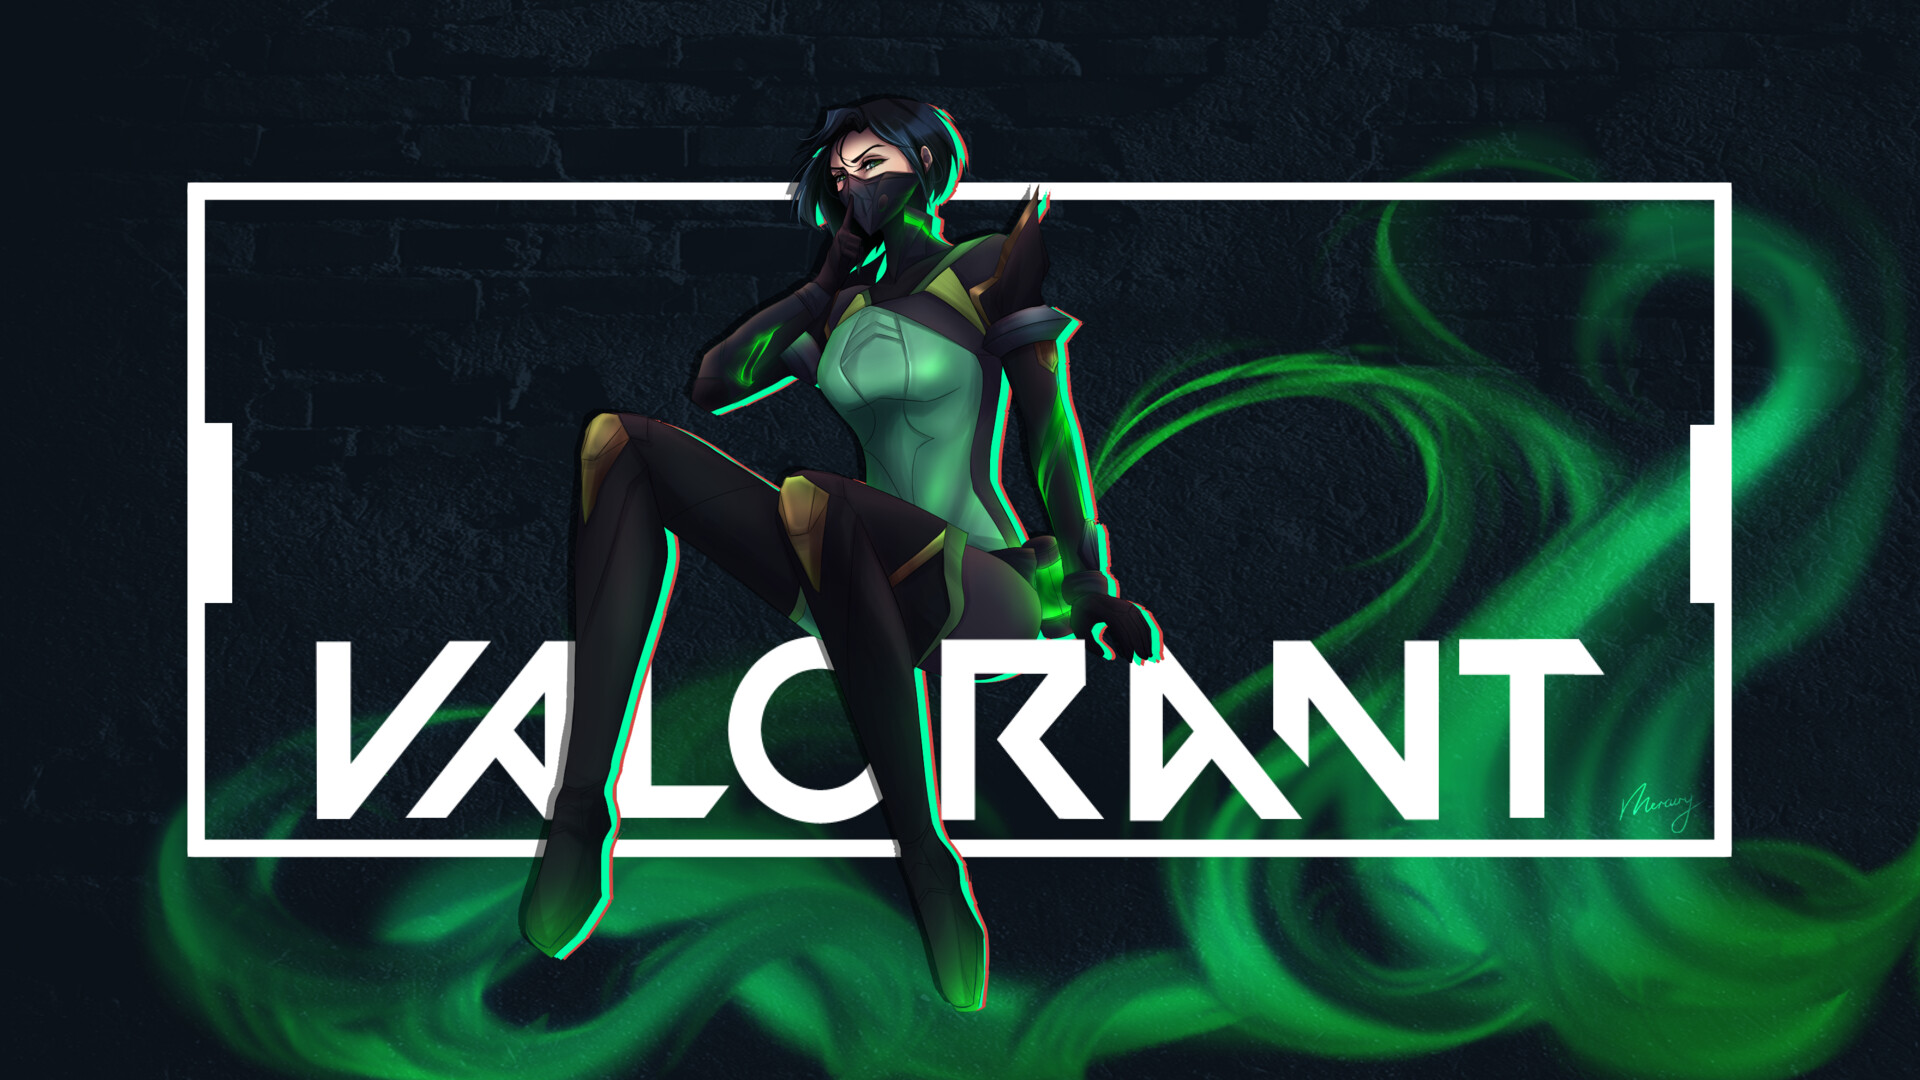 HD wallpaper: Valorant, Sage (valorant), Riot Games